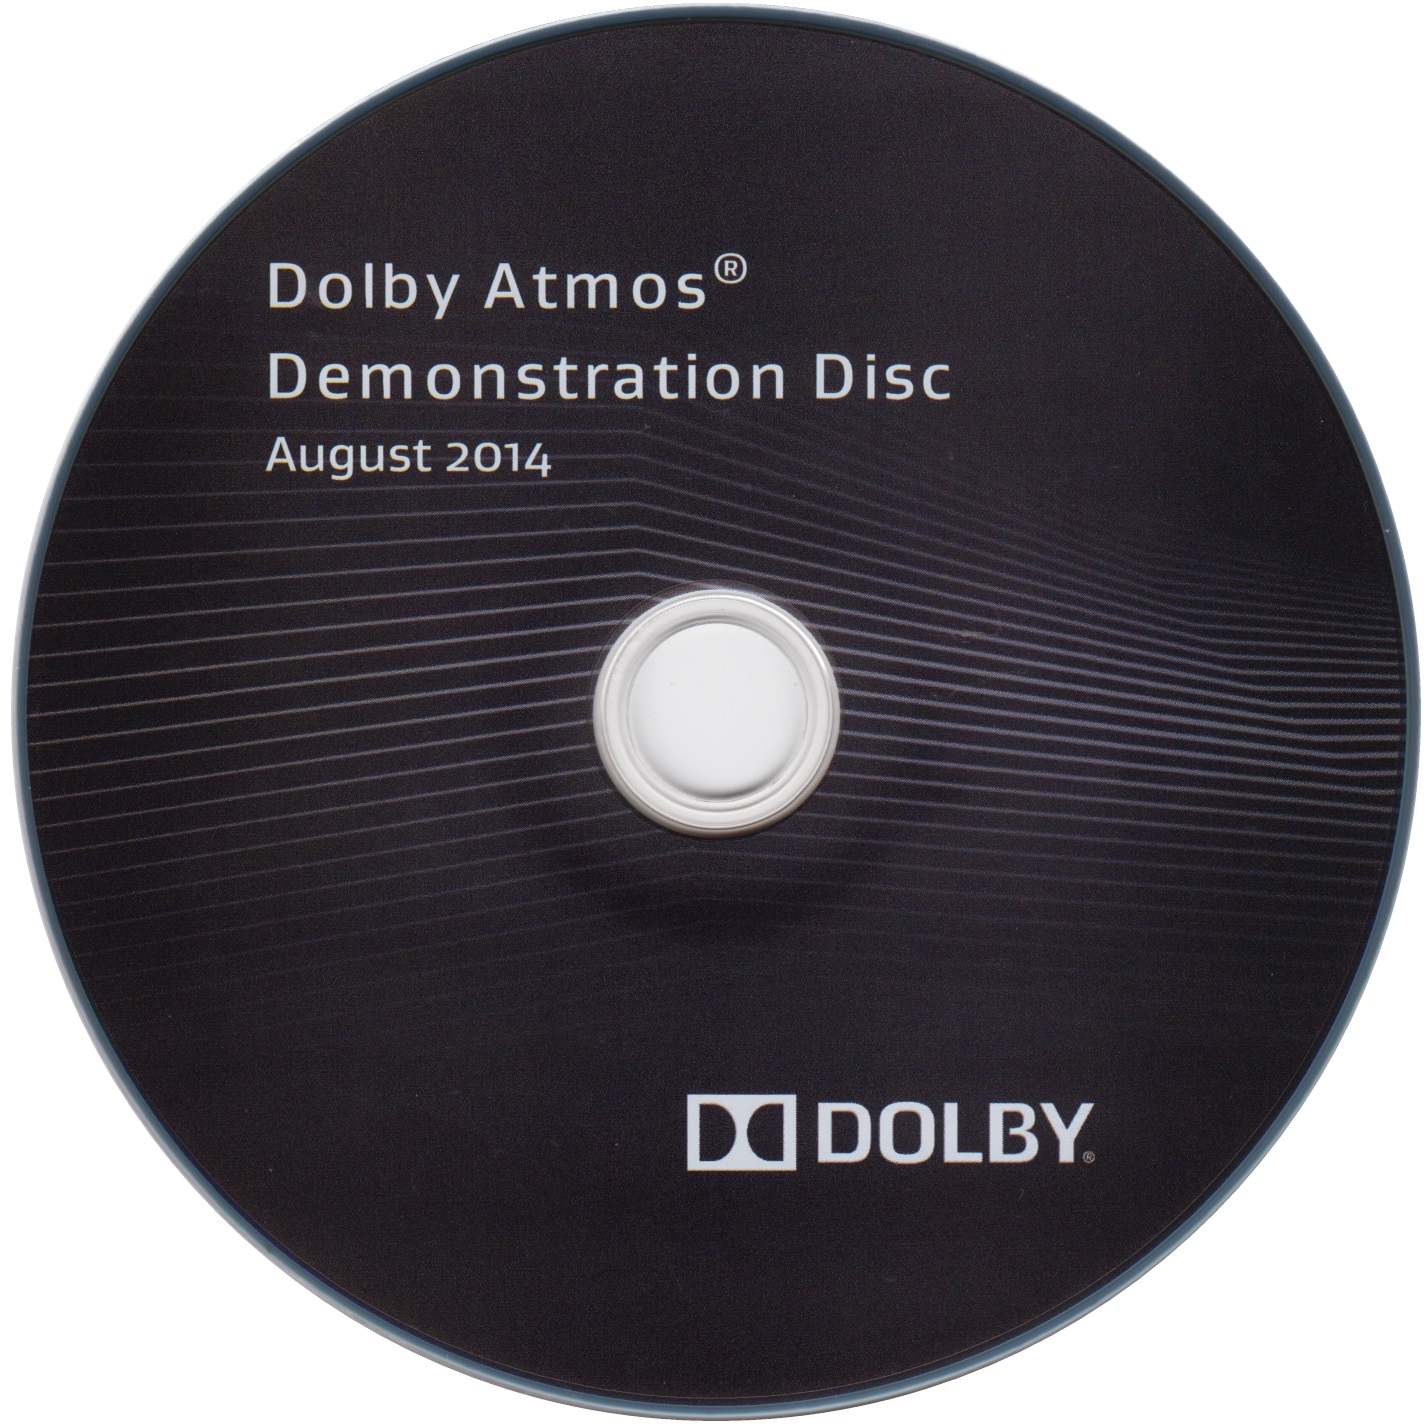 4k dolby atmos demo disk